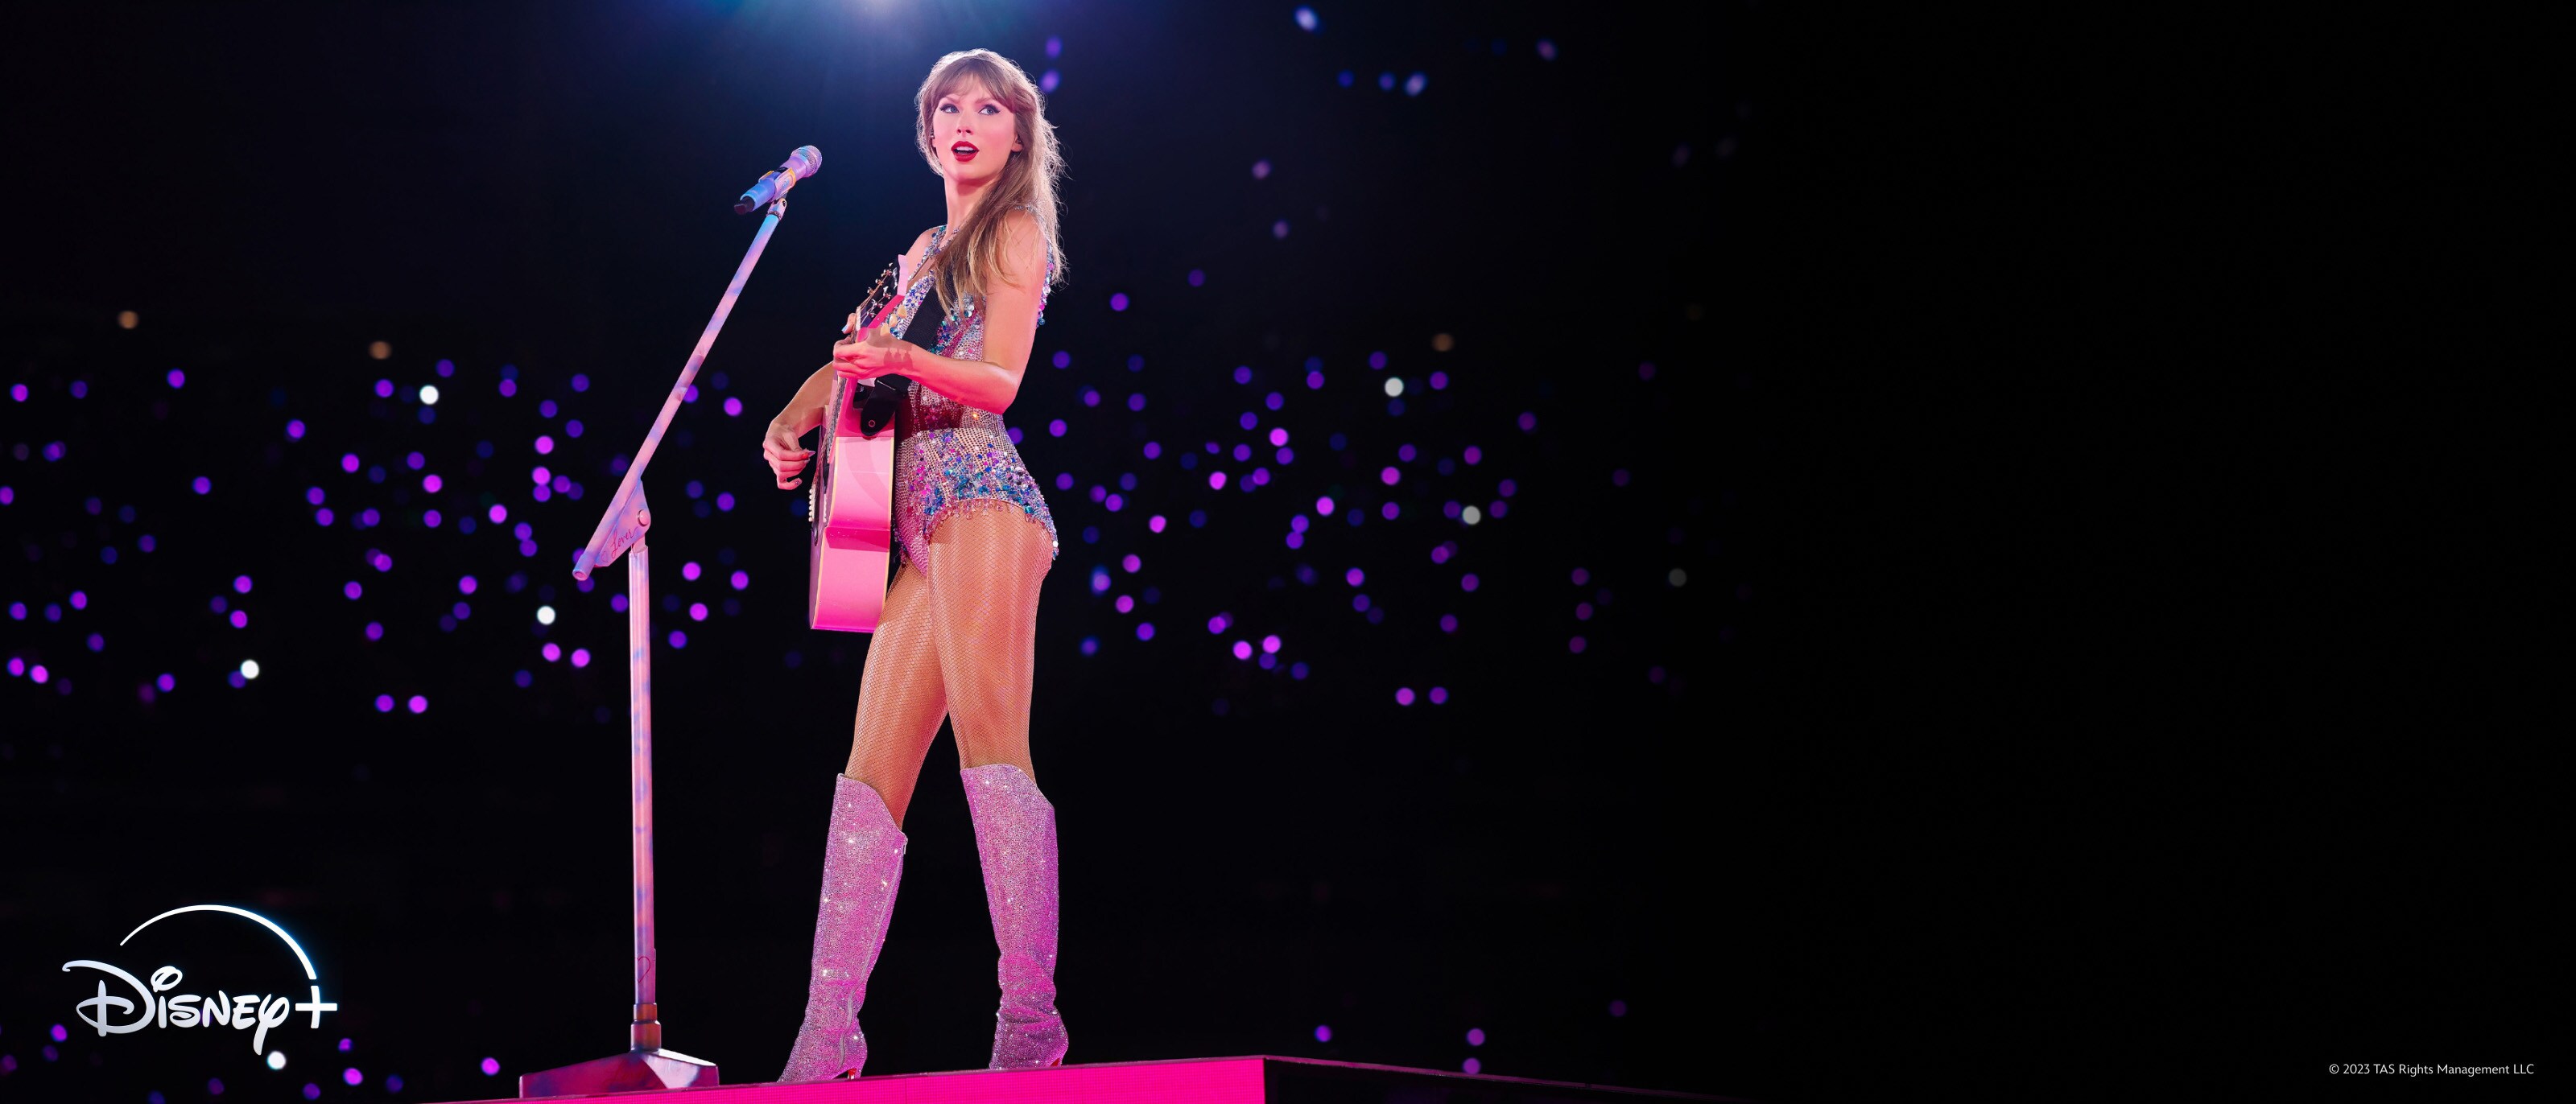 Taylor Swift | The Eras Tour (Taylor's Version) - זמין בסטרימינג כעת בדיסני+